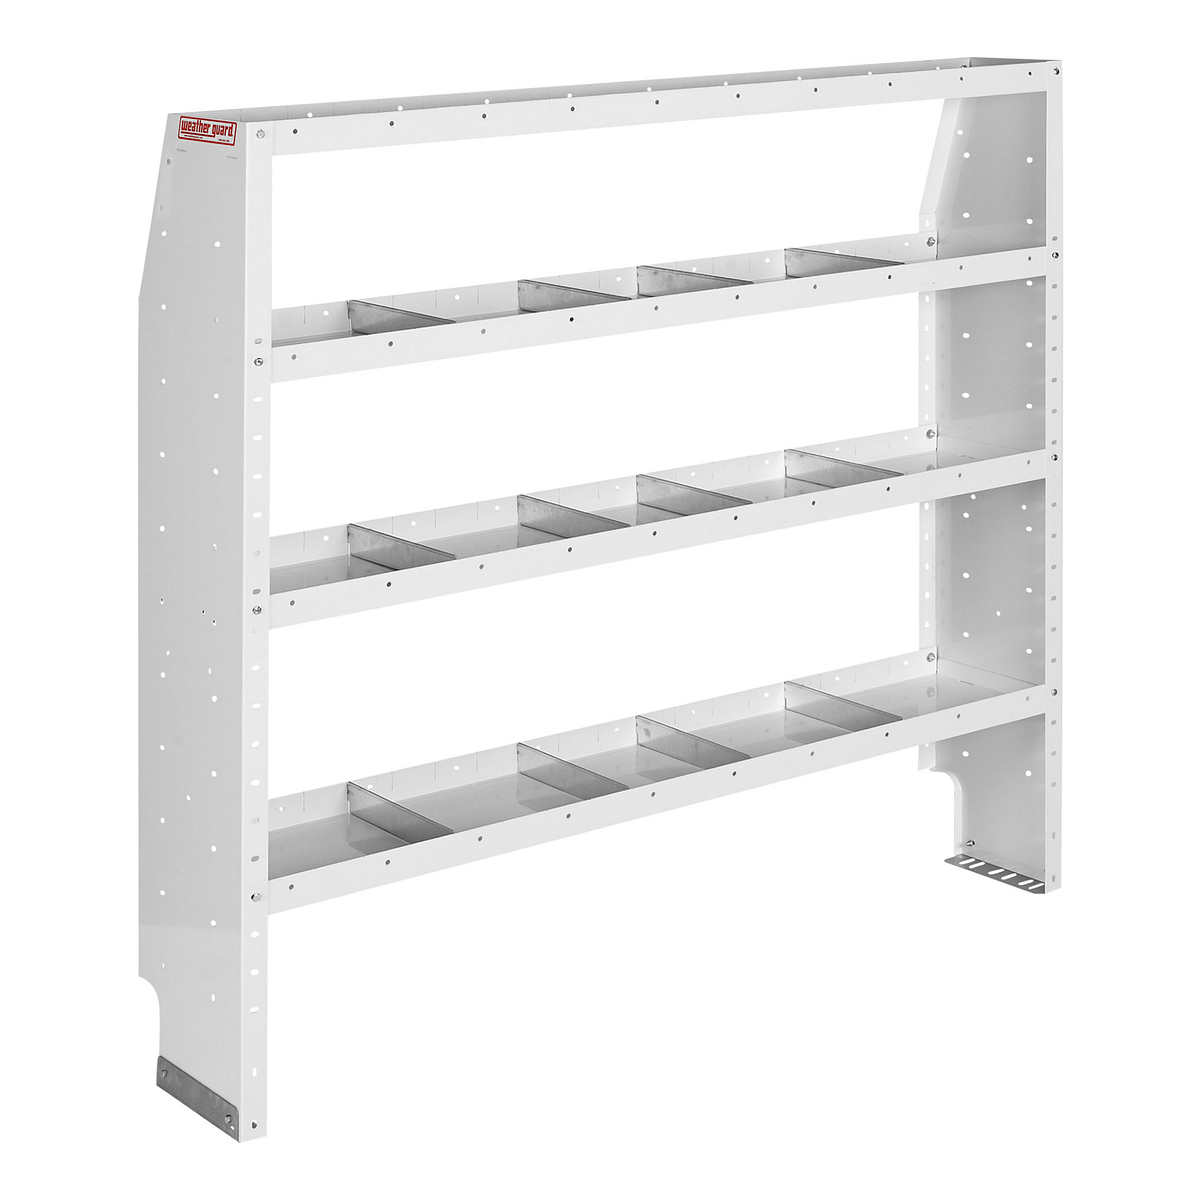 Adjustable 4 Shelf Unit - 60 in. x 60 in. x 13.5 in.